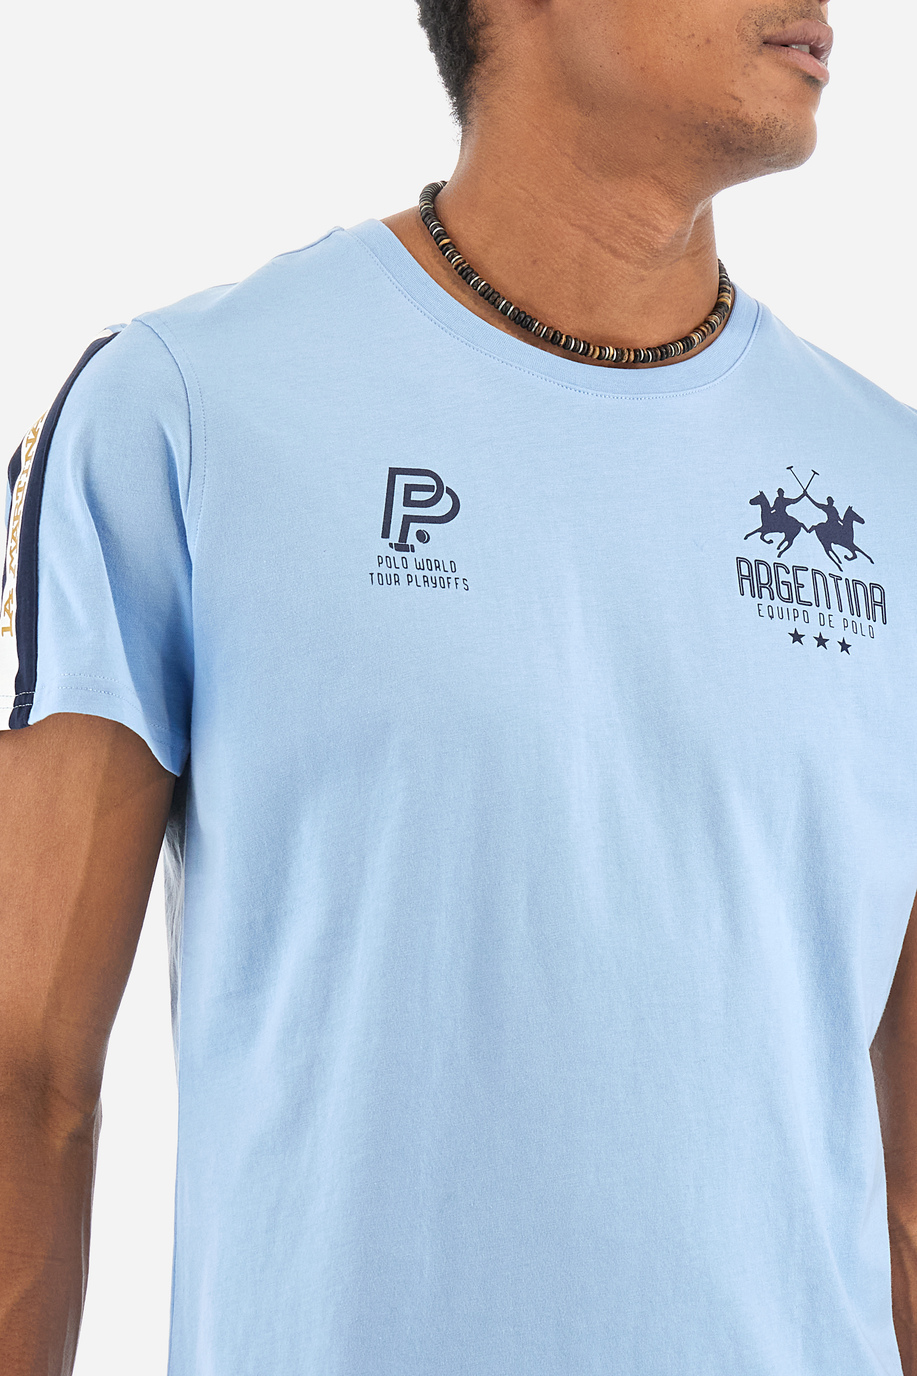 T-shirt coupe classique en coton - Yitro - Polo Player | La Martina - Official Online Shop